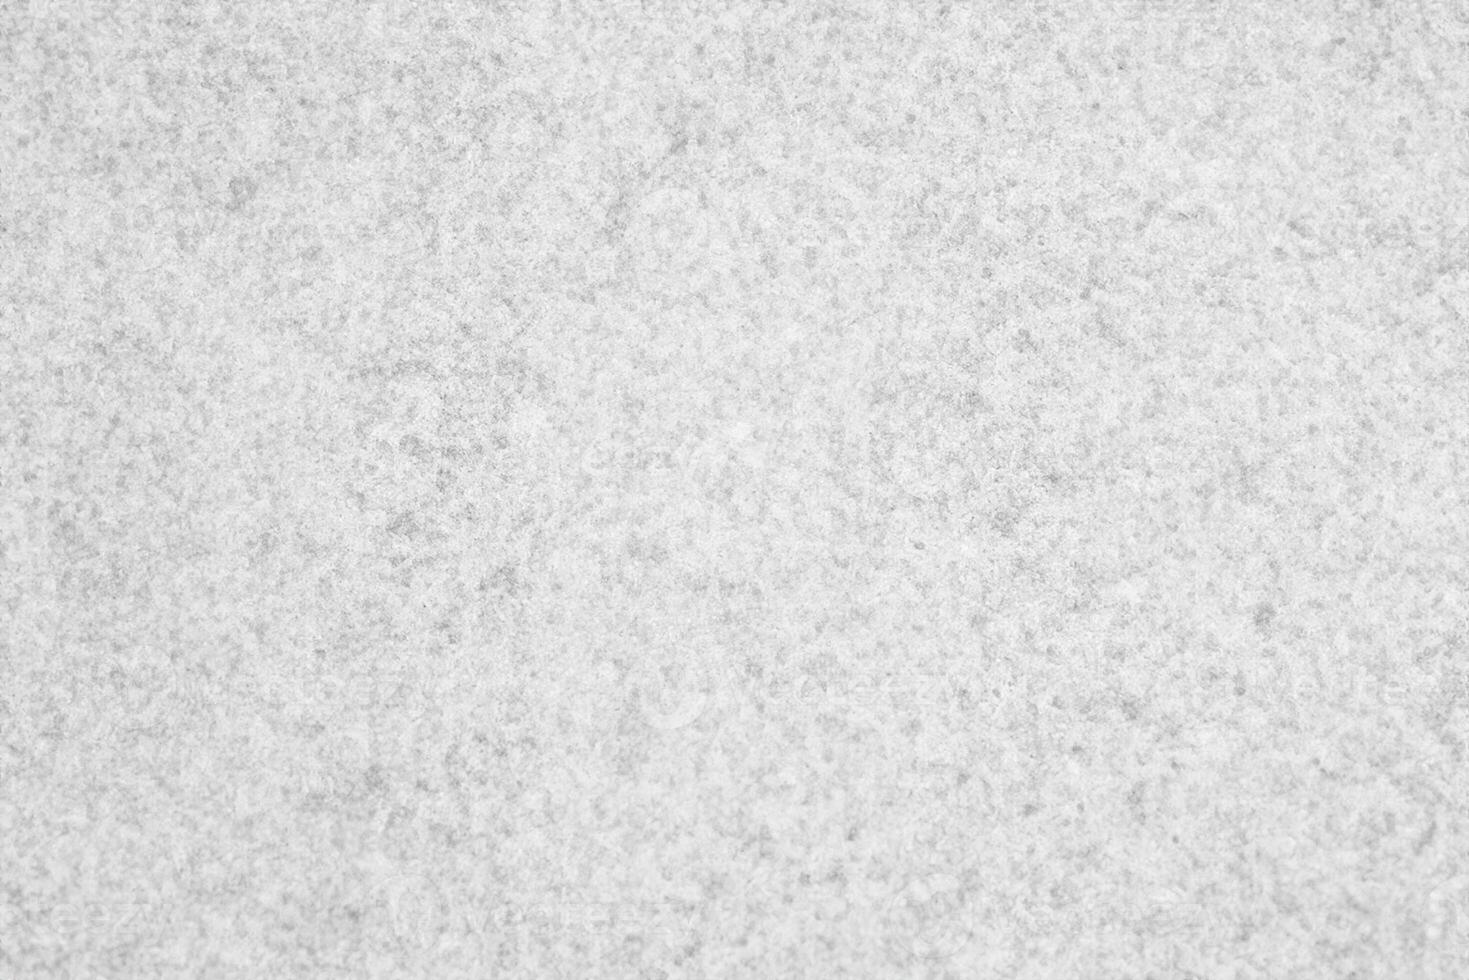 minimalistische grijs tapijt structuur achtergrond. foto